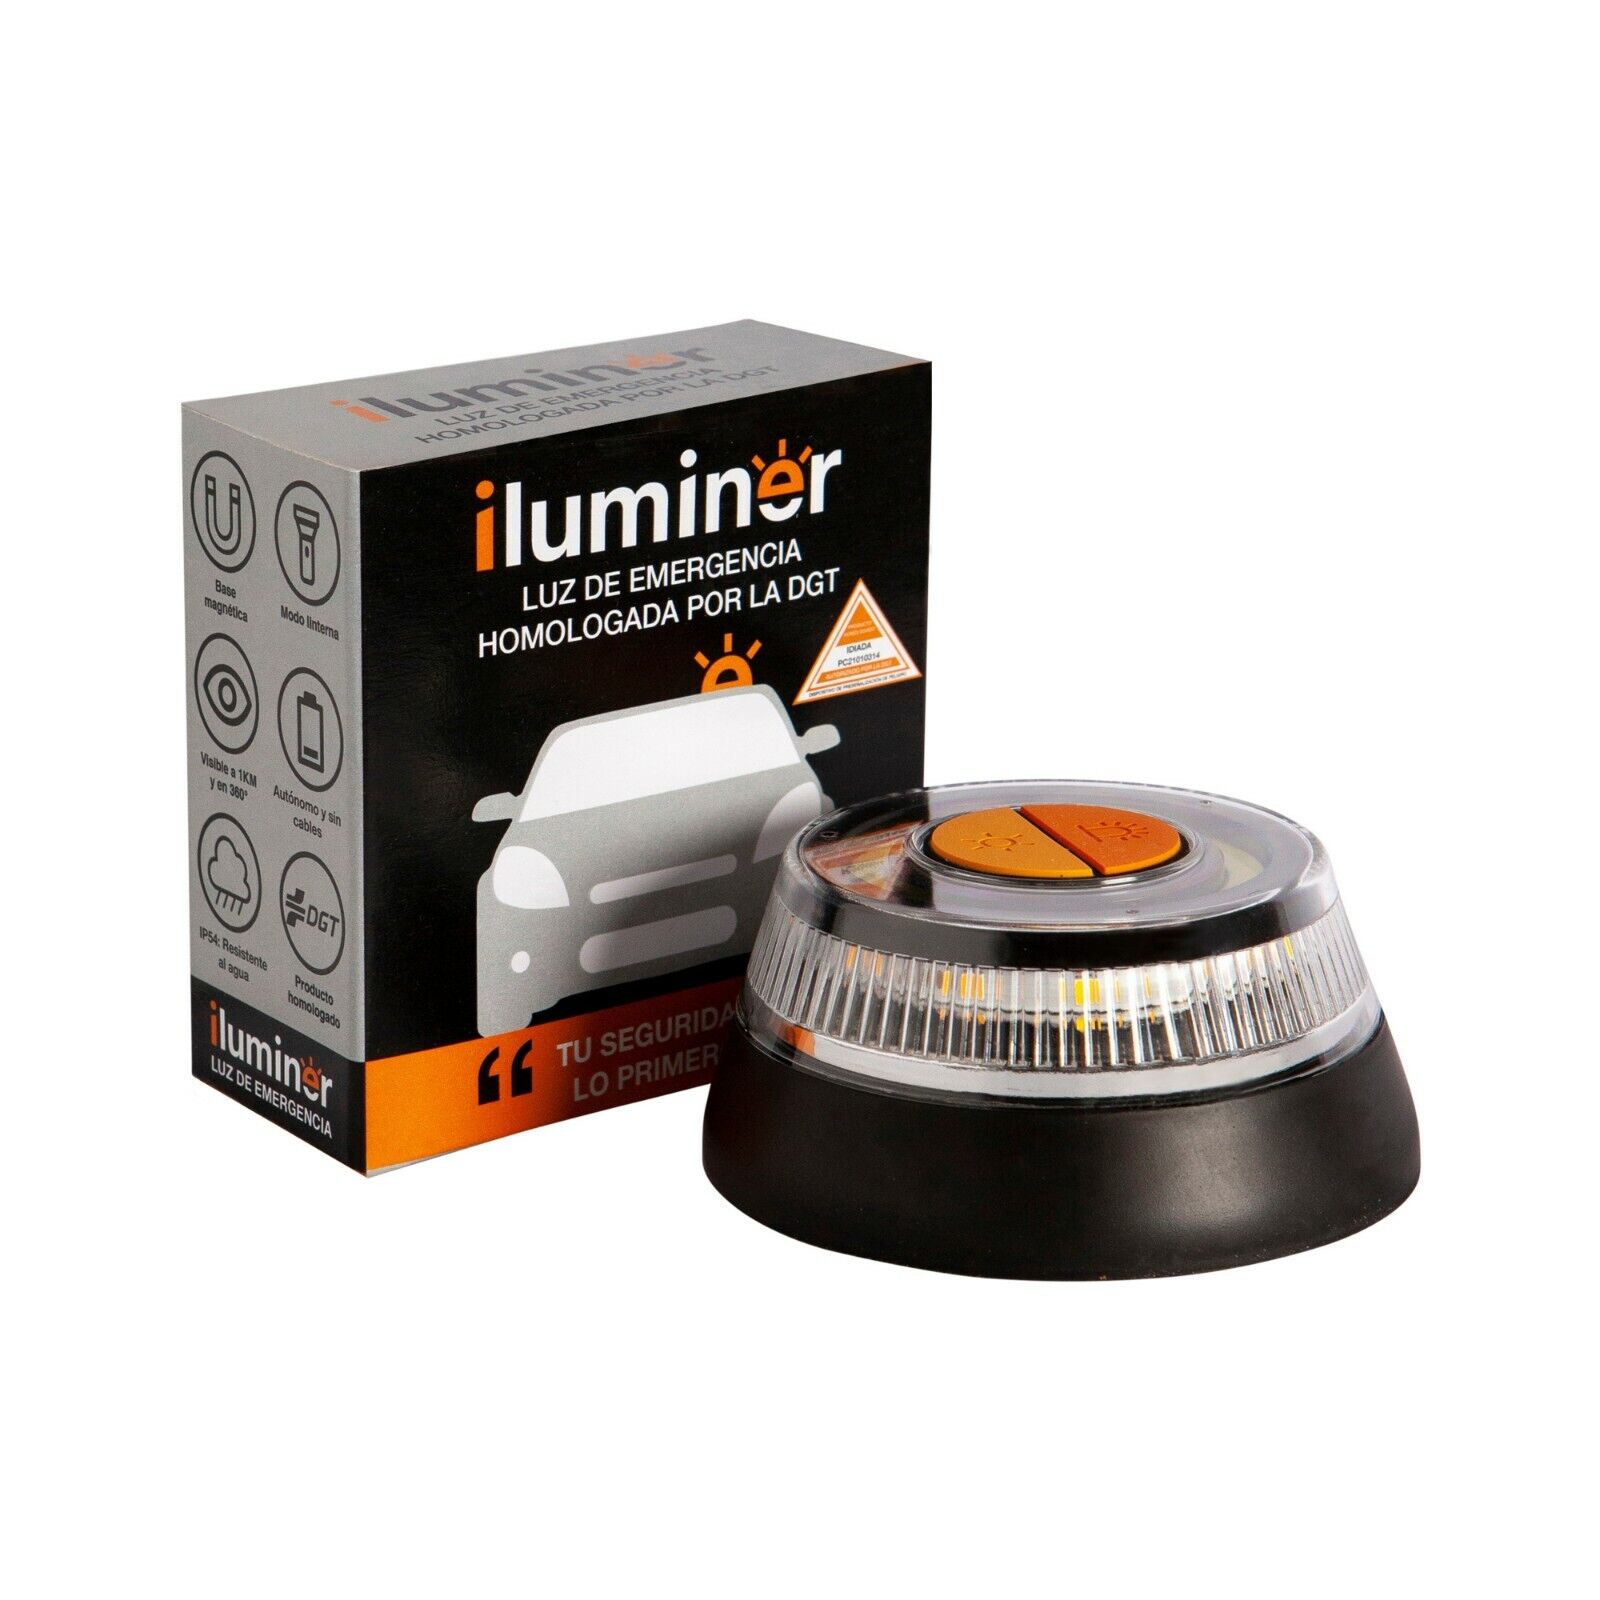 iluminer -Señal v16 Luz de Emergencia homologada por la DGT (IDIADA PC21010314).